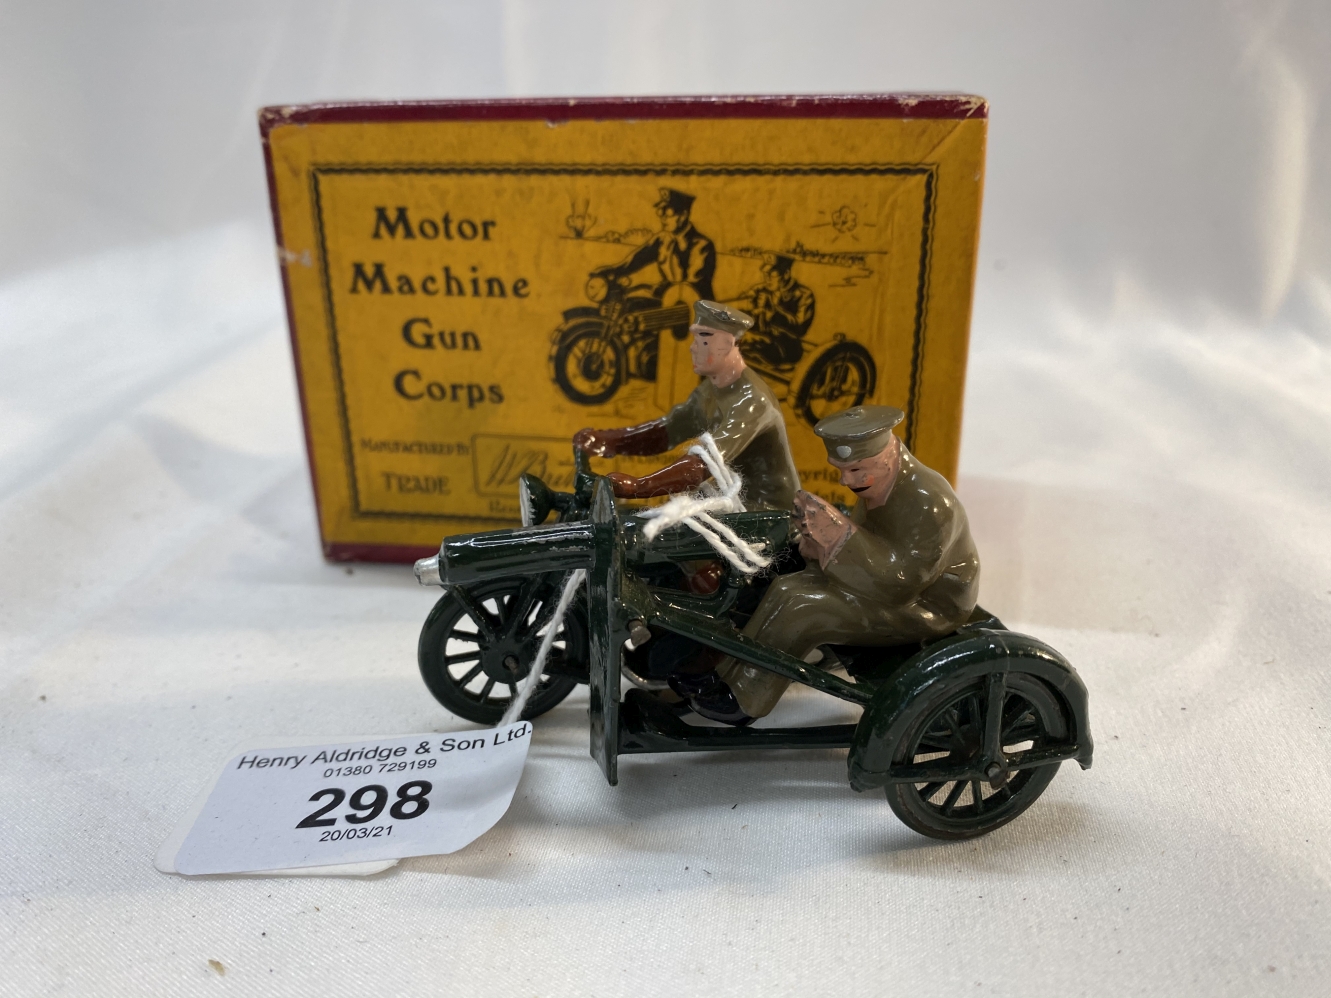 Military Toys: W. Britain, motor machine, Gun Corps, with rider and gunner, military green, post-war